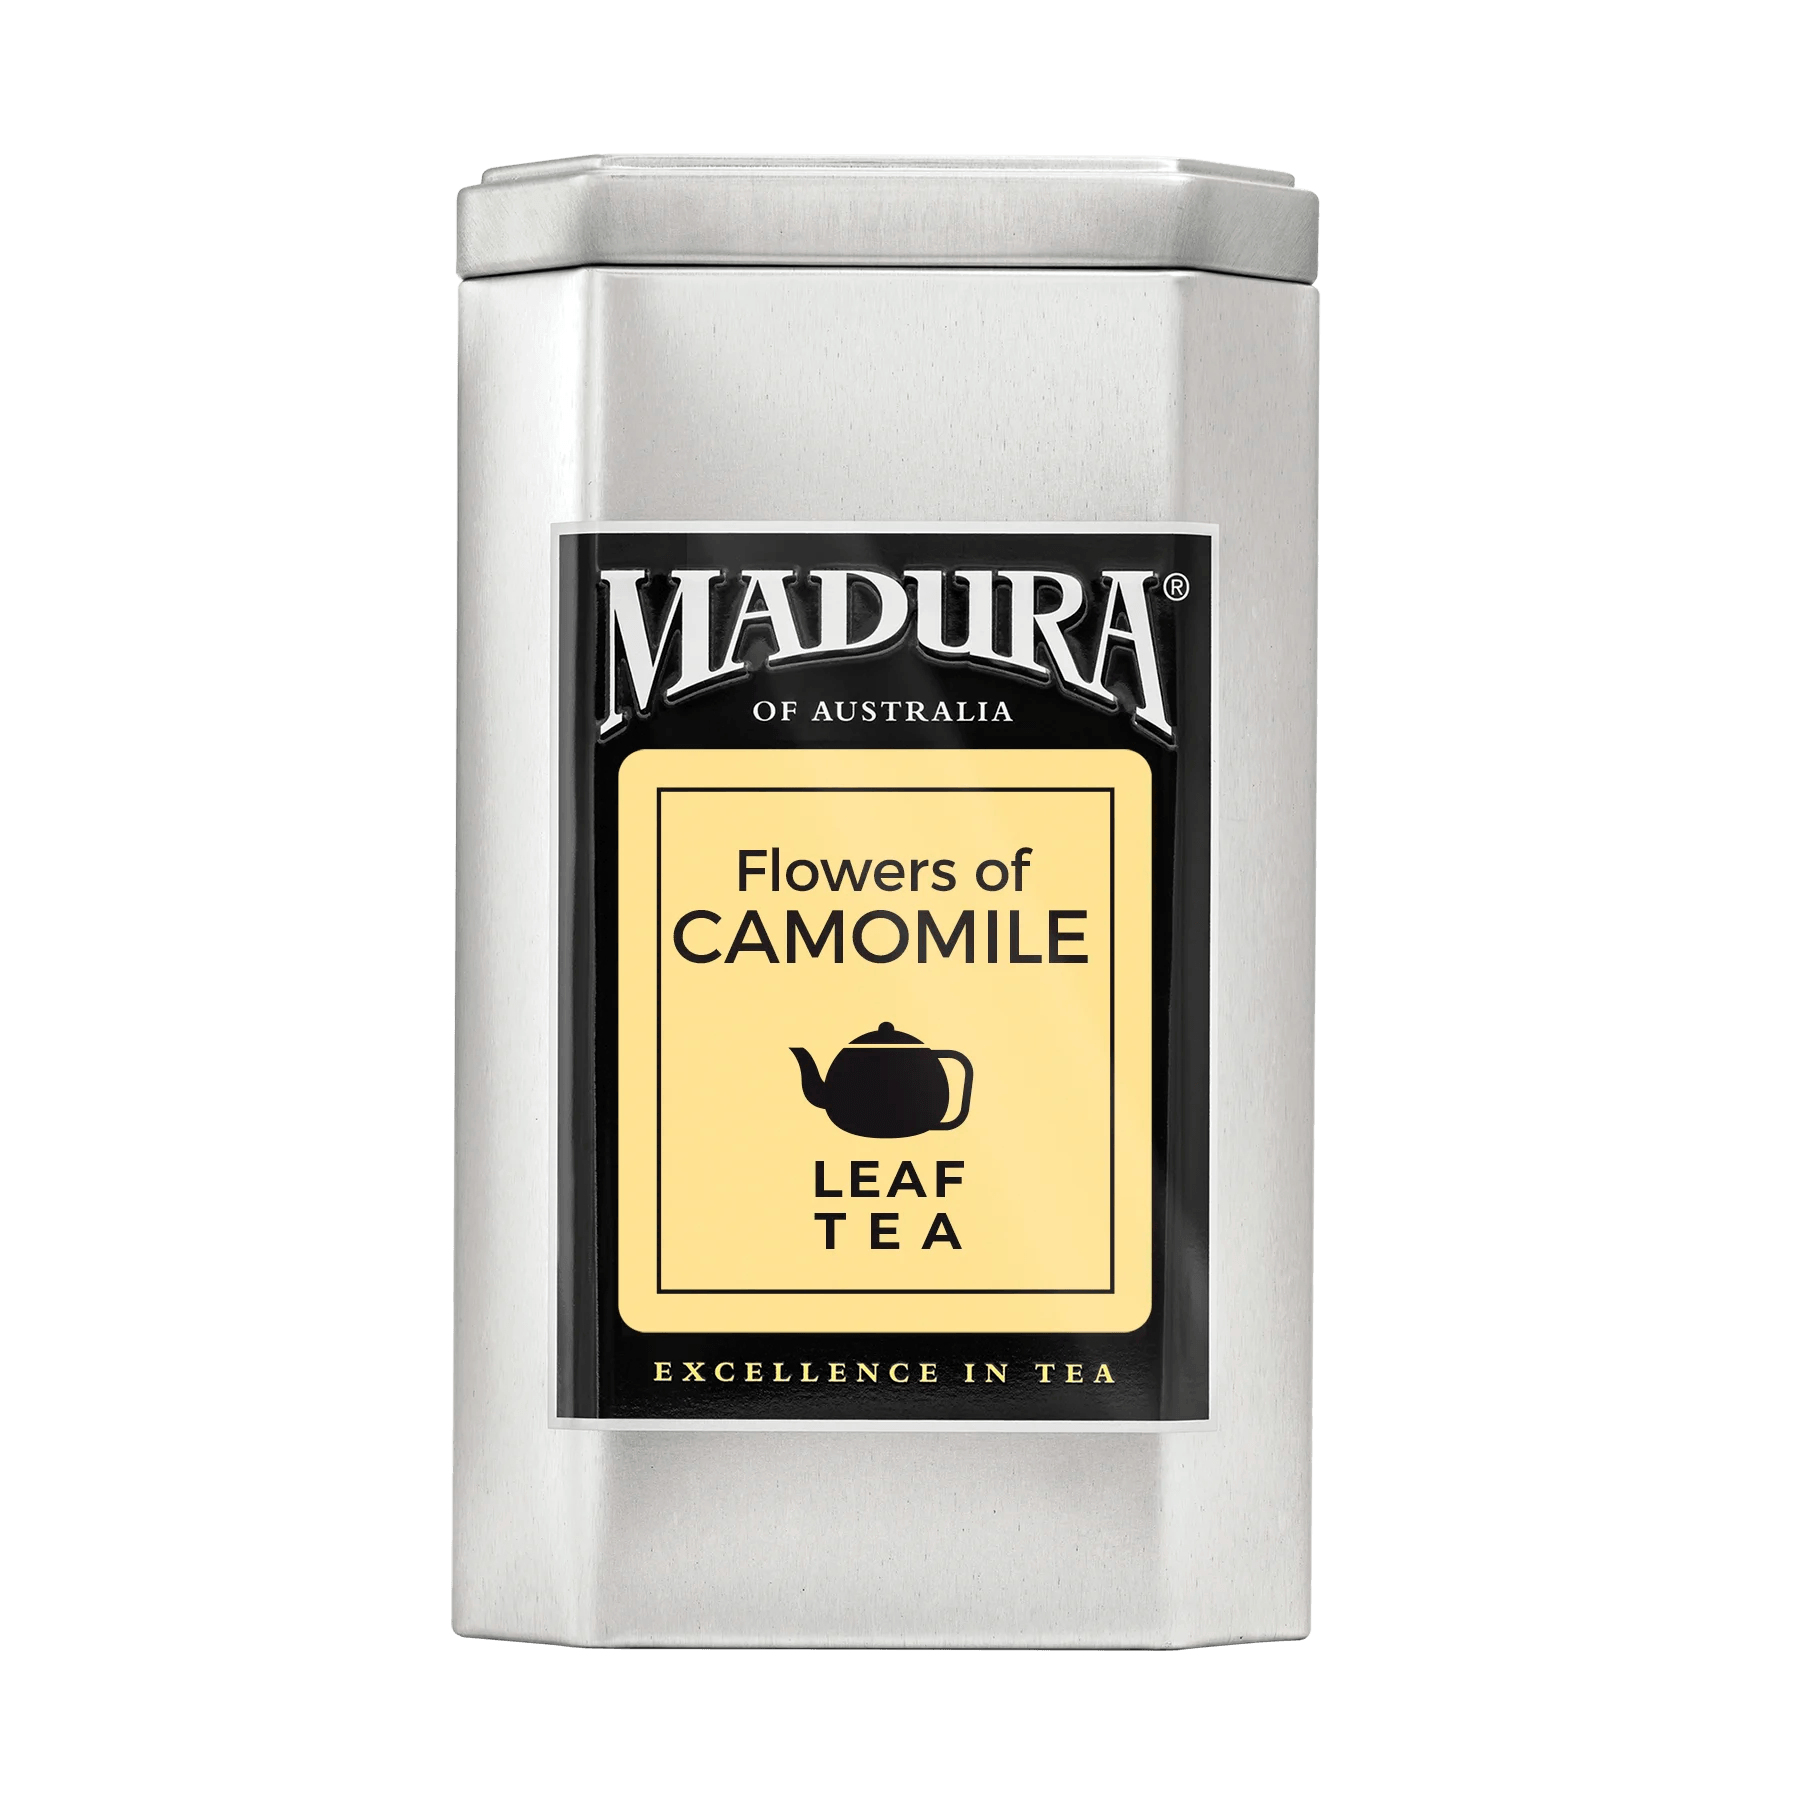 Empty Caddy with Flowers of Camomile Leaf Tea Label - Madura Tea